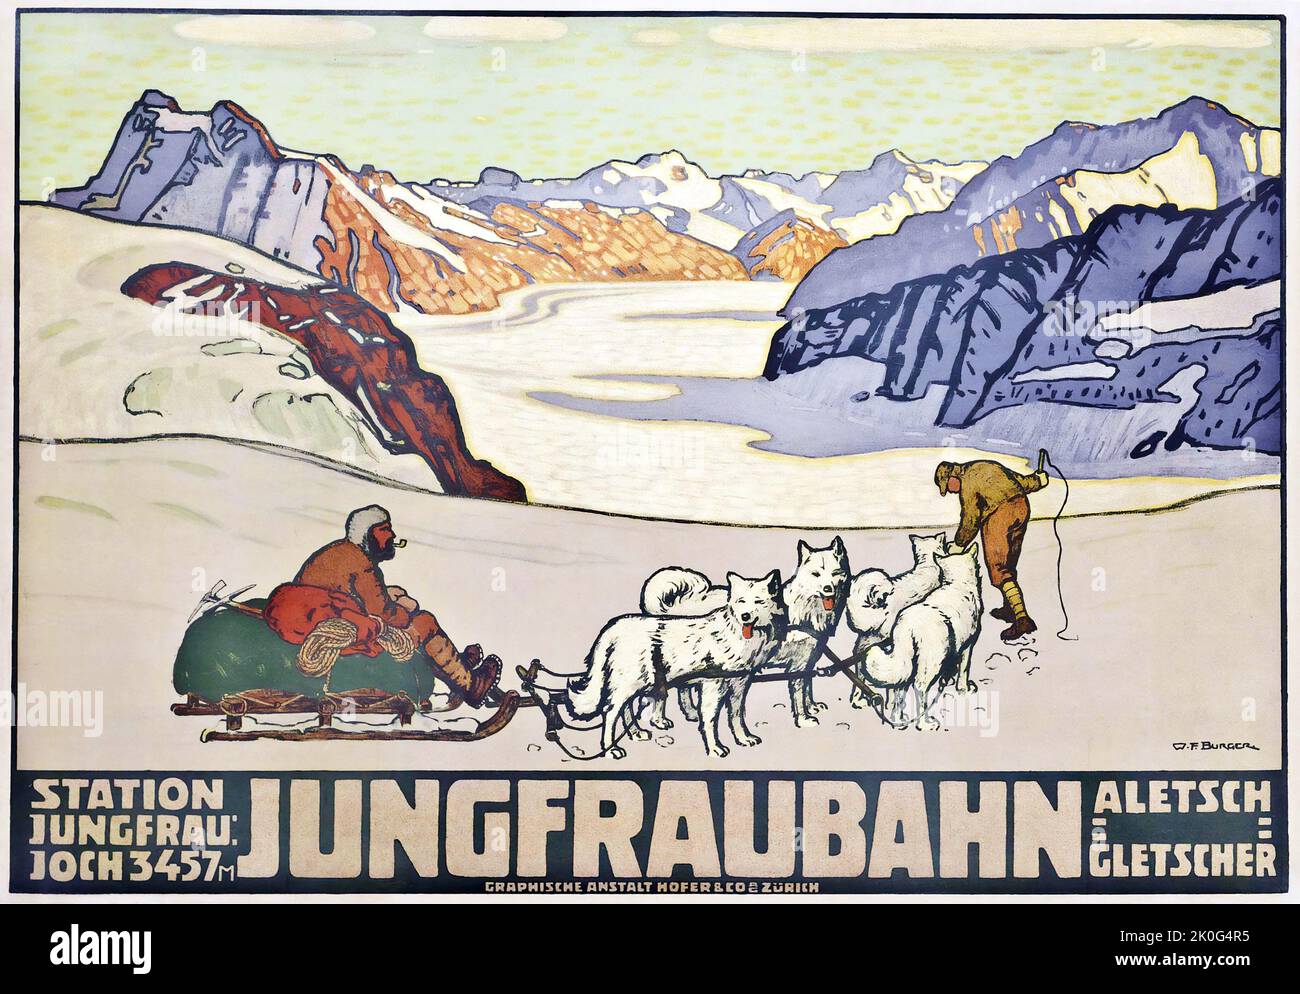 Emil Cardinaux (1877-1936) JUNGFRAUBAHN - Schweiz, Suisse, Switzerland - Travel poster Stock Photo